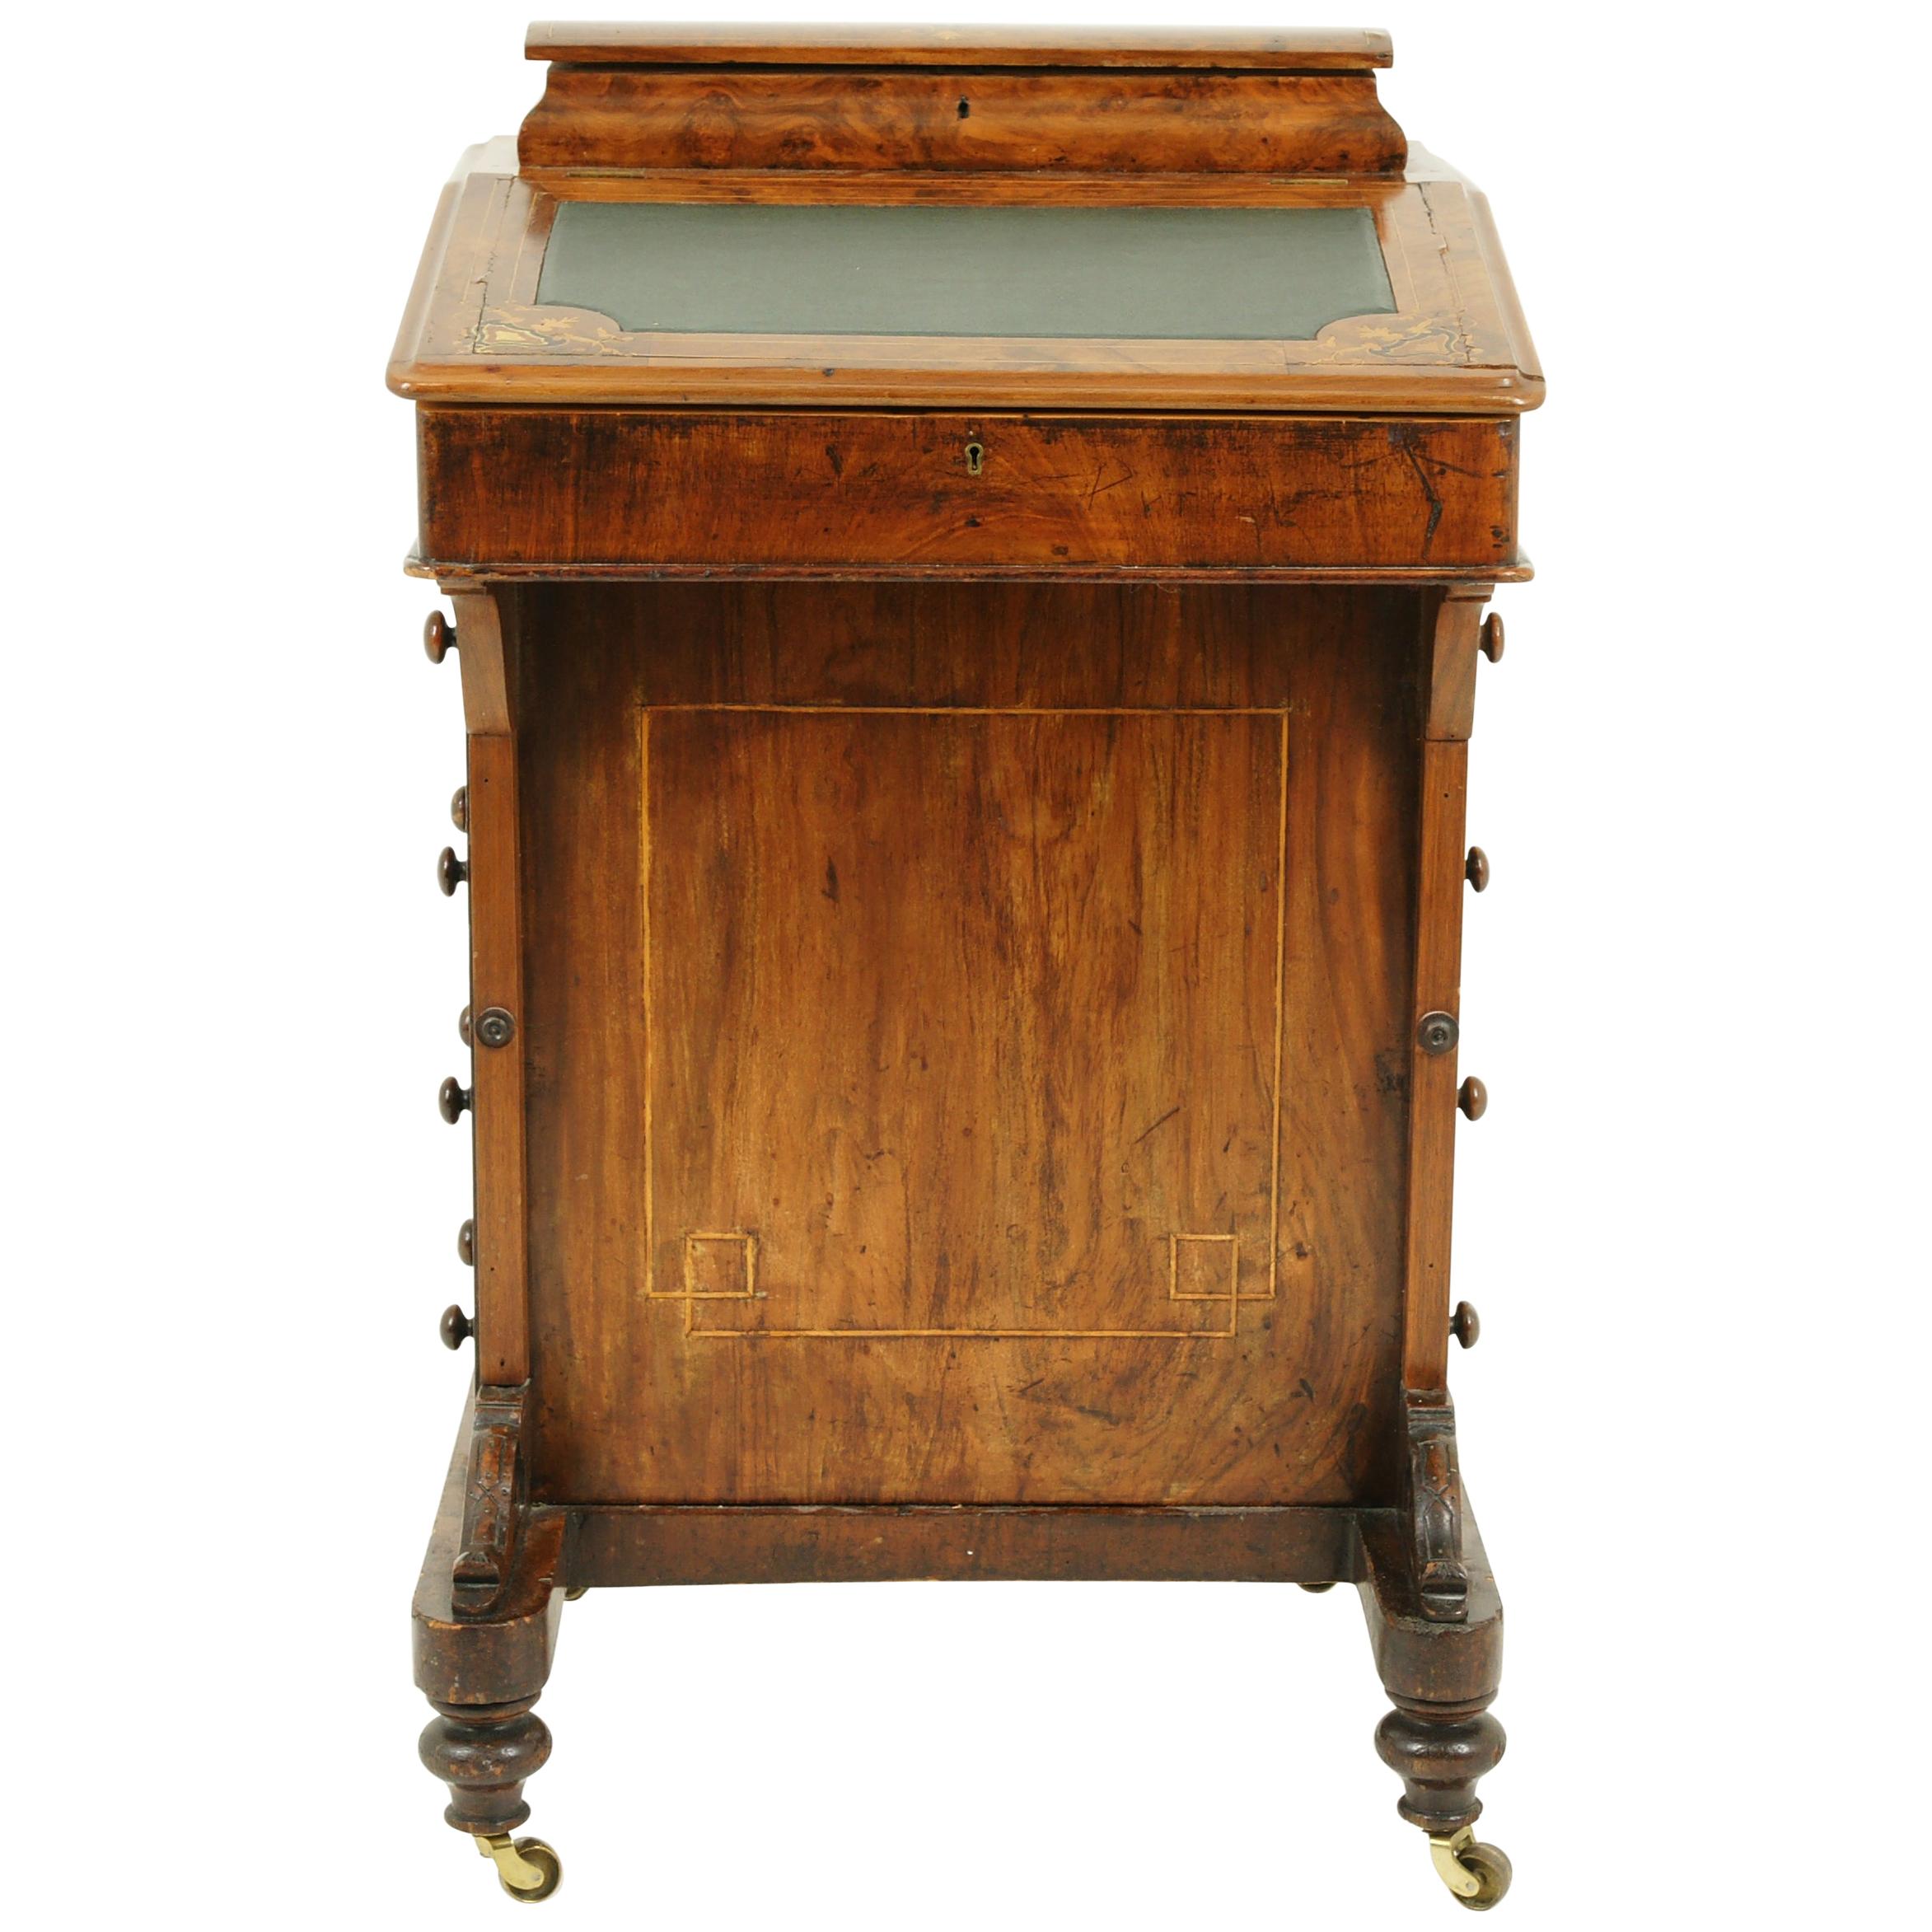 Antique Davenport Desk, Inlaid Burr Walnut Desk, Writing Desk, Victorian, B1557